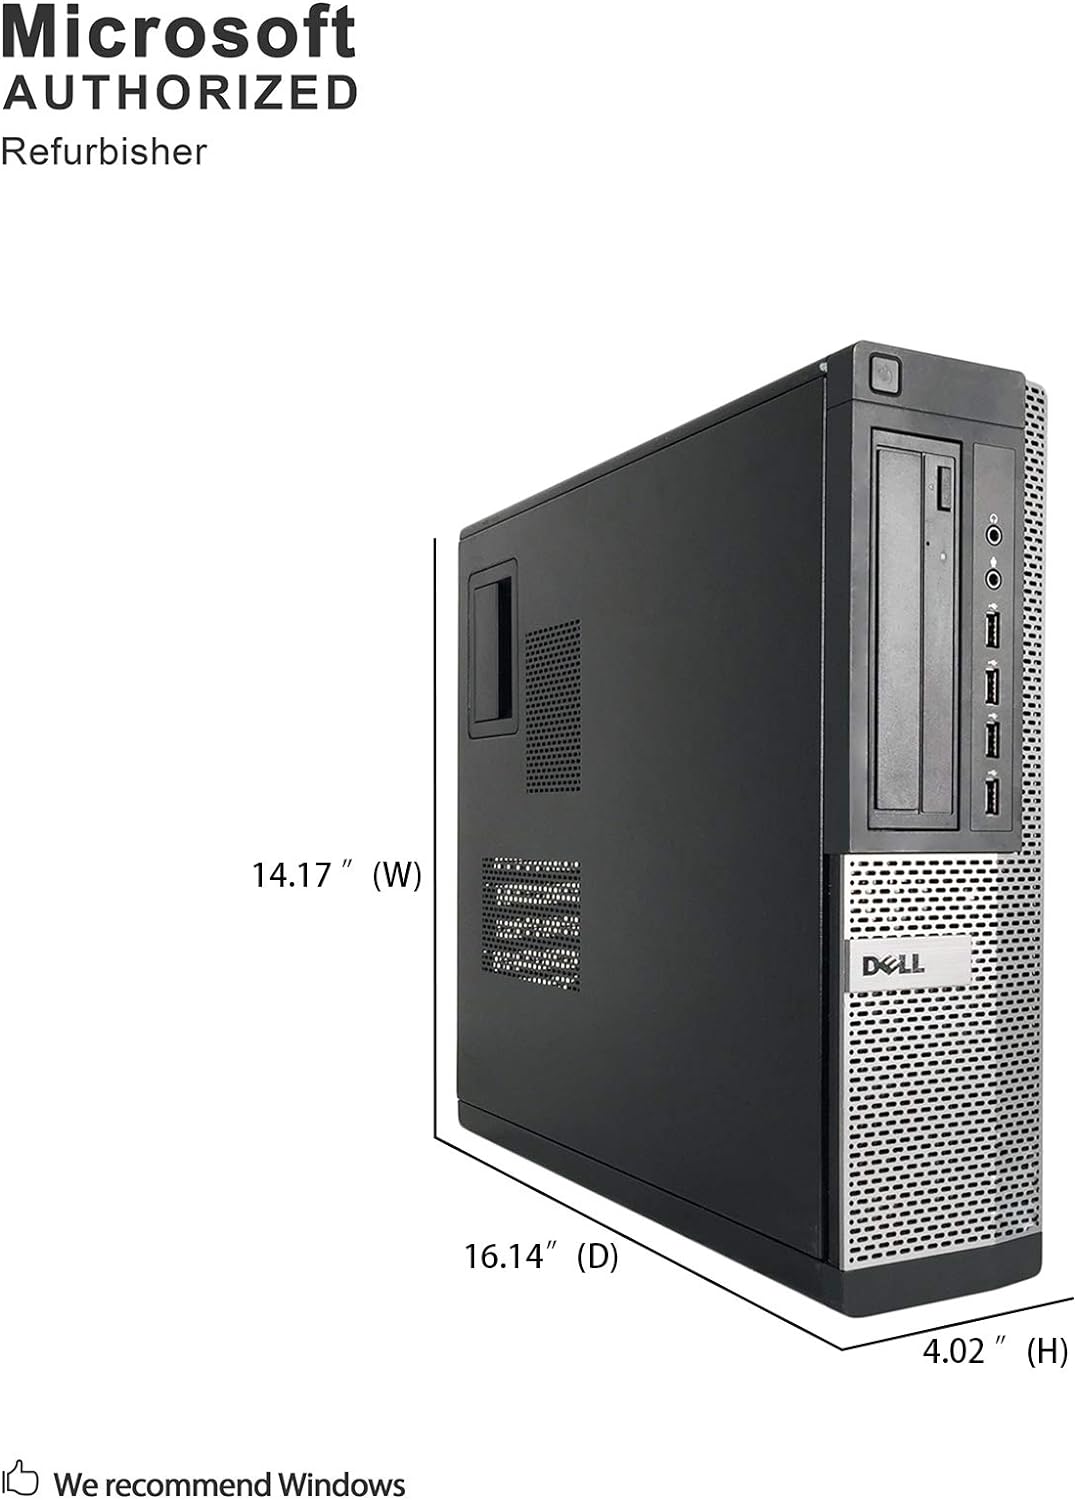 Dell Optiplex 7010 Business Desktop Computer PC (Intel Core i5-3470, 8GB RAM 256GB SSD, HDMI, WiFi, DVD-RW) Win 10 Pro with CD, 1GB Graphics